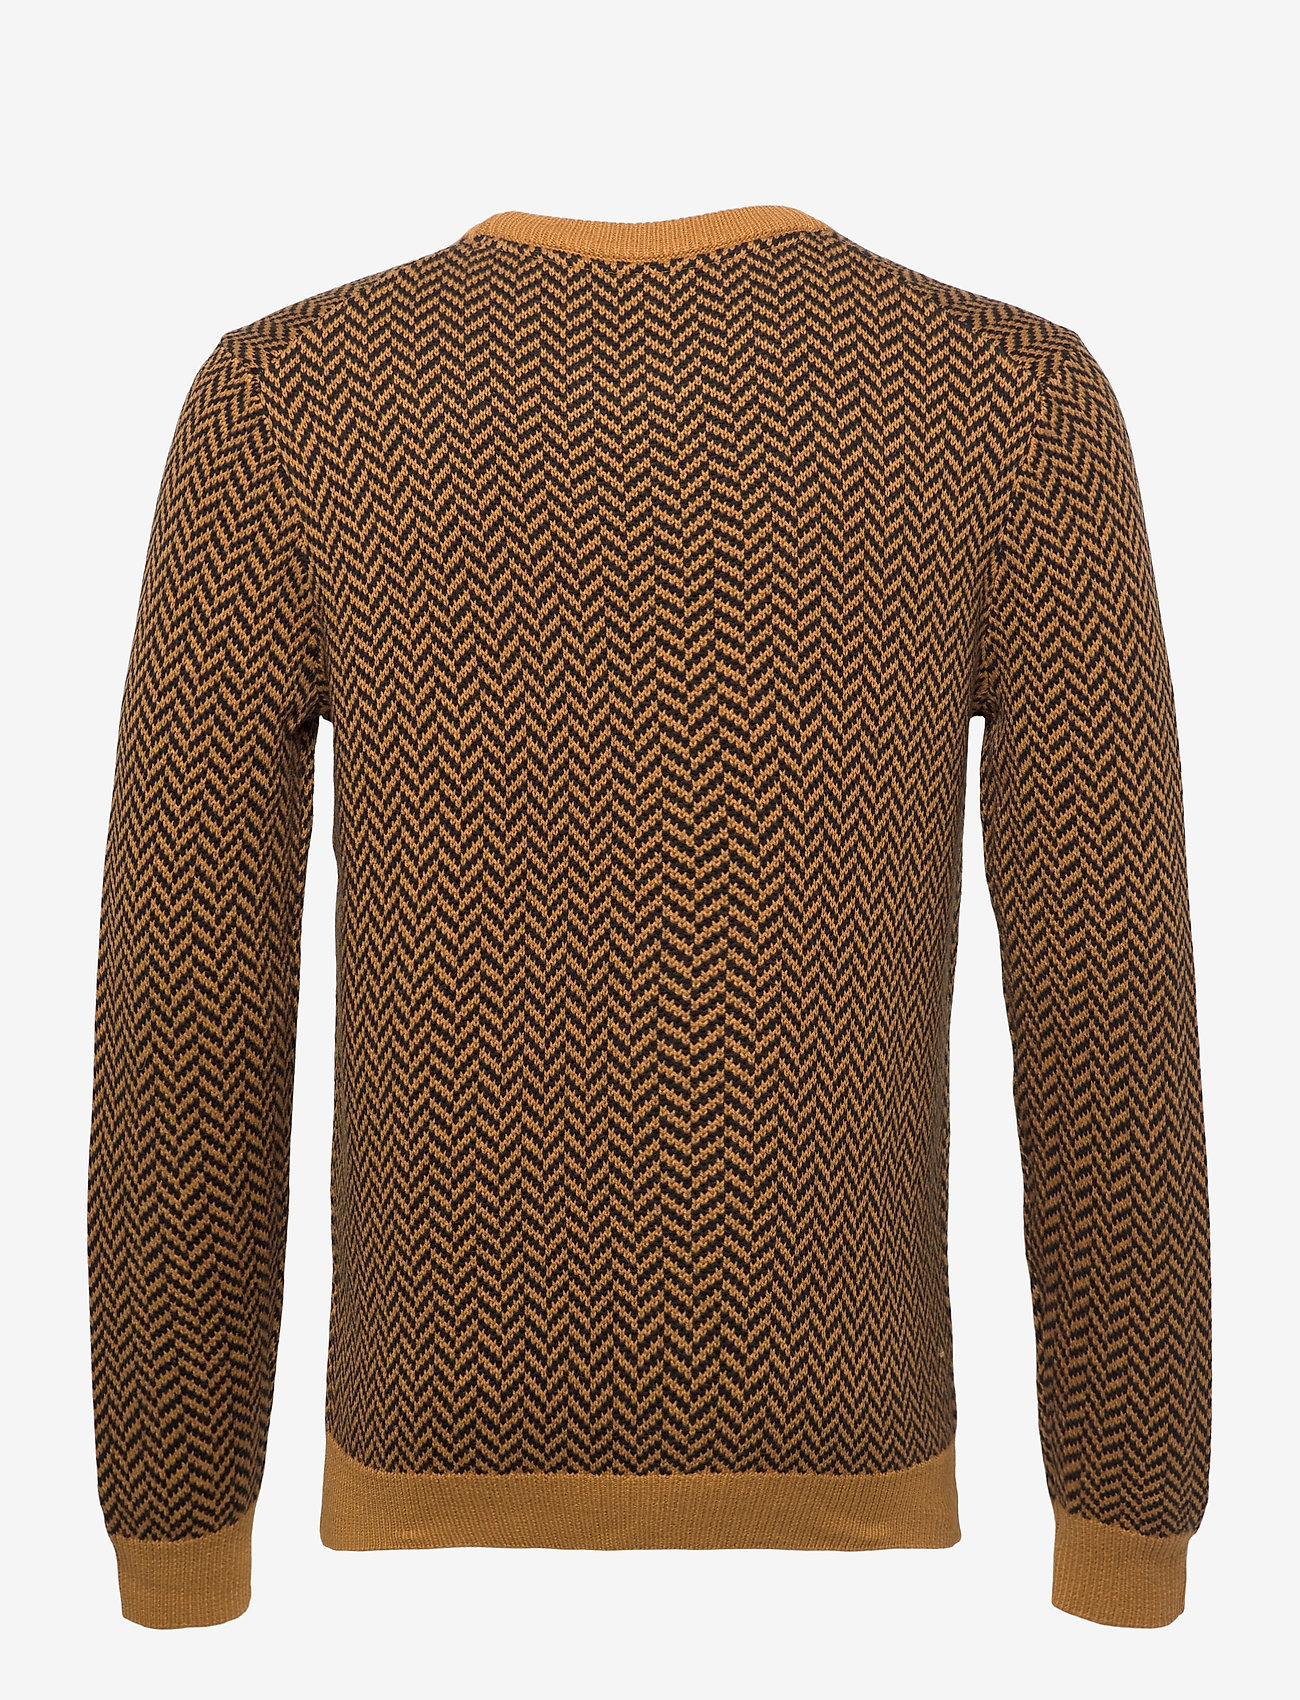 Herringbone Jacquard Knitted Jumper (Caramel/ Black) (999 kr) - Lyle & - | Boozt.com